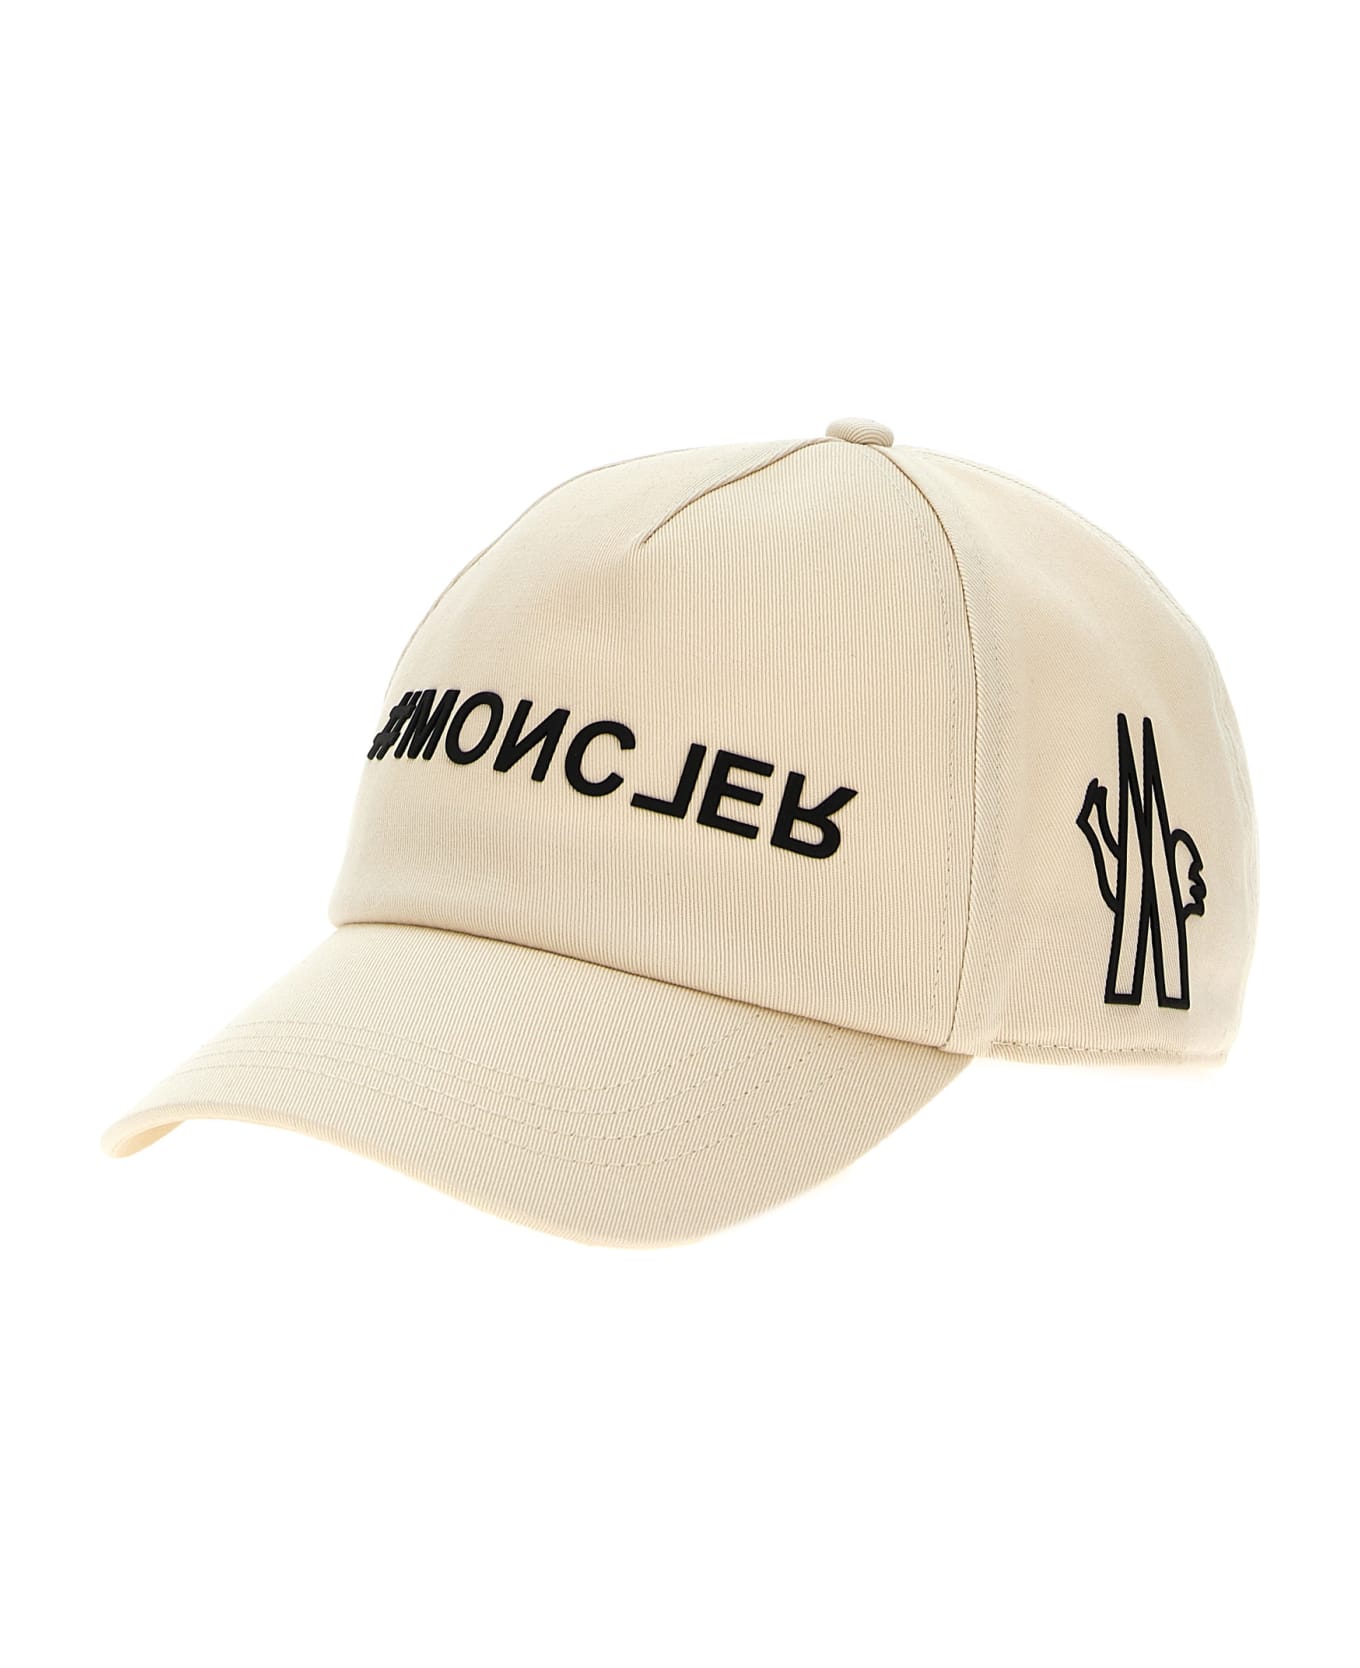 Moncler Grenoble Logo Printed Cap - White/Black 帽子